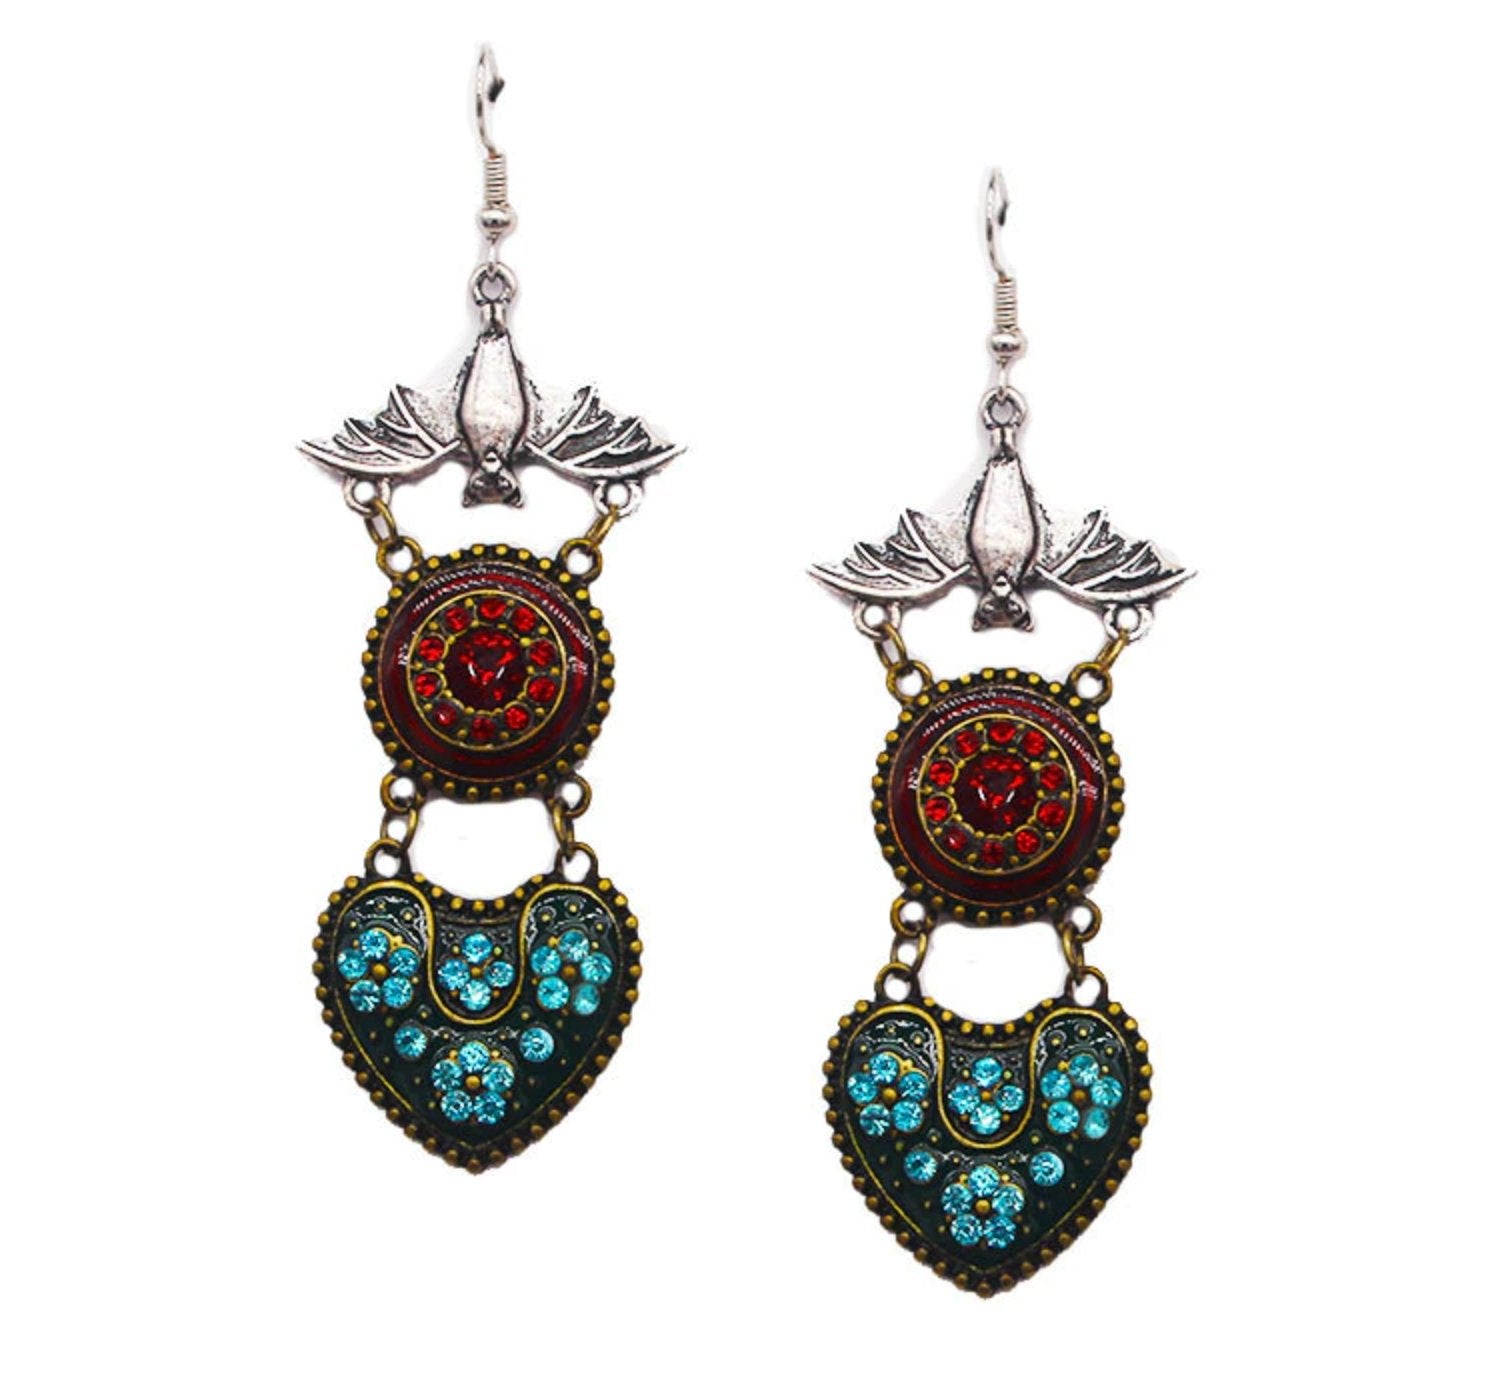 Majestic Jeweled Hanging Bat Earrings - Keep Salem Odd